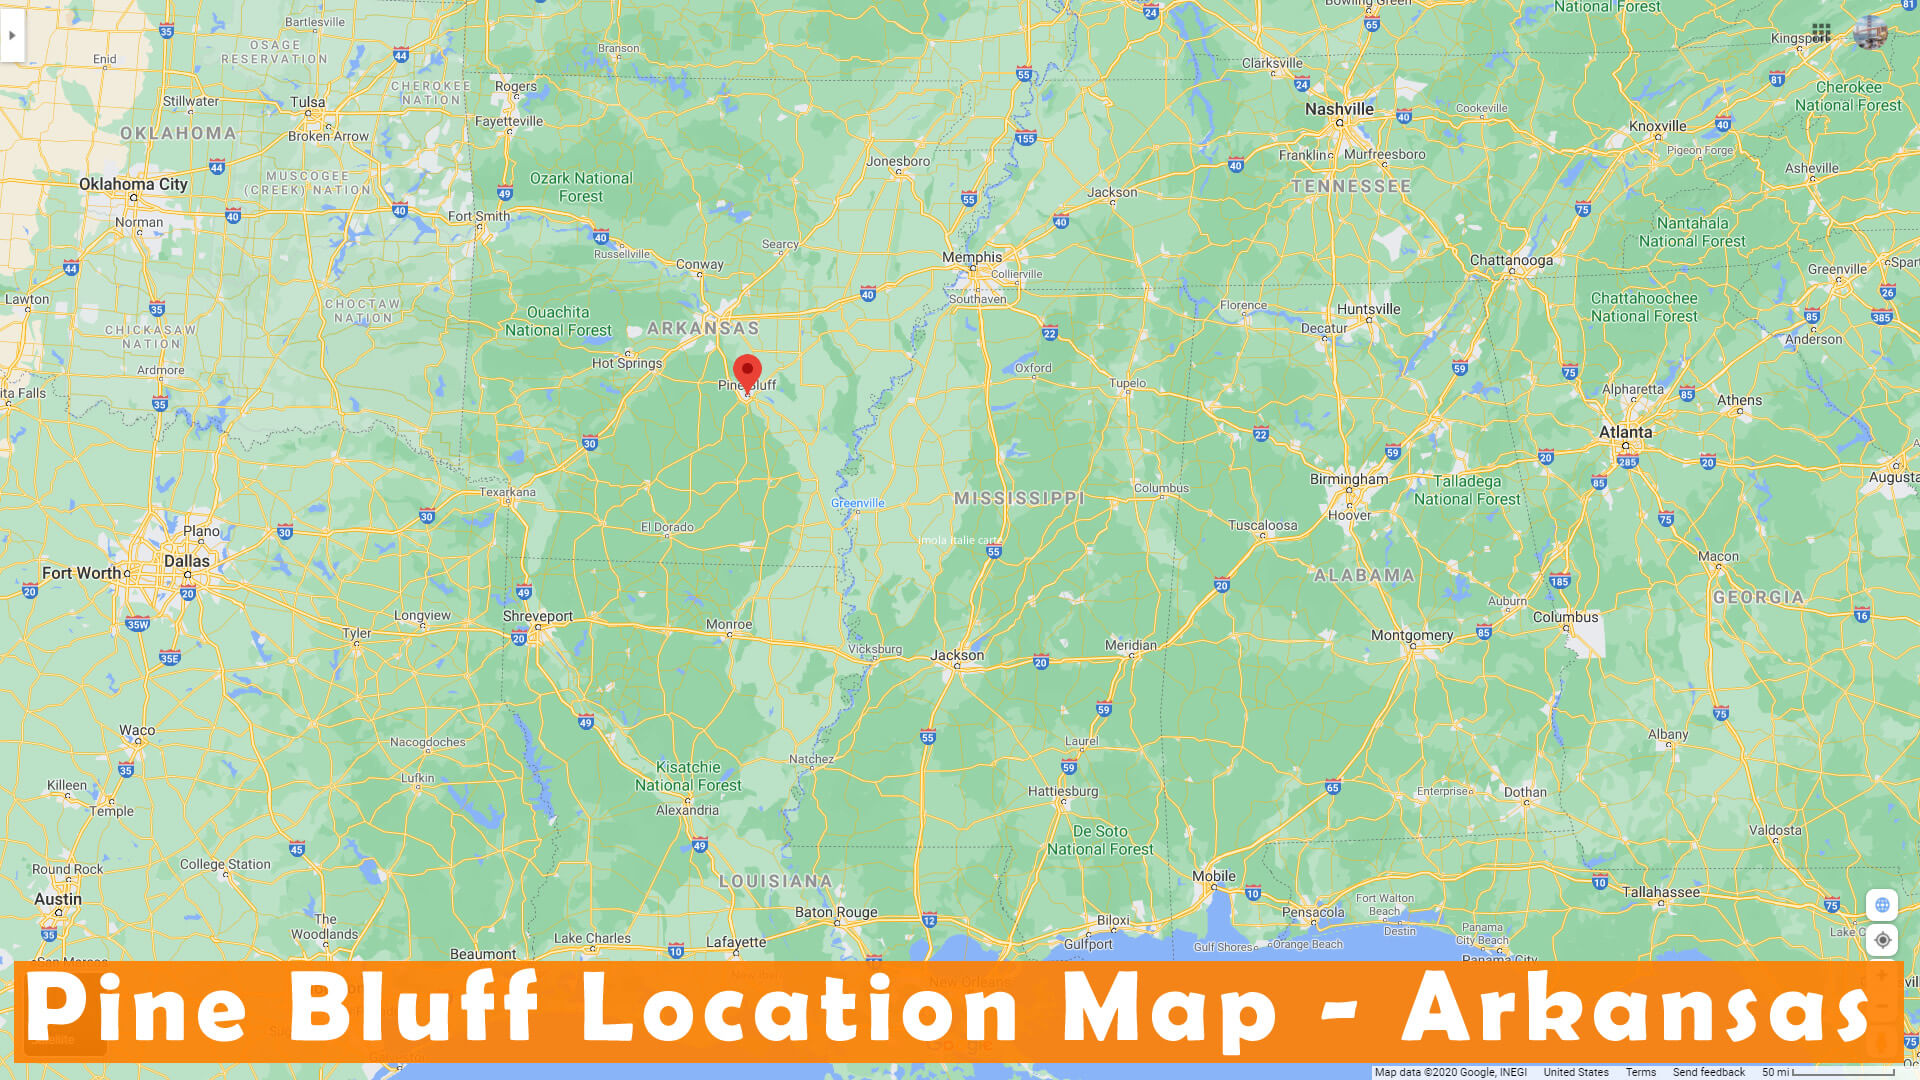 Pine Bluff Location Map Arkansas